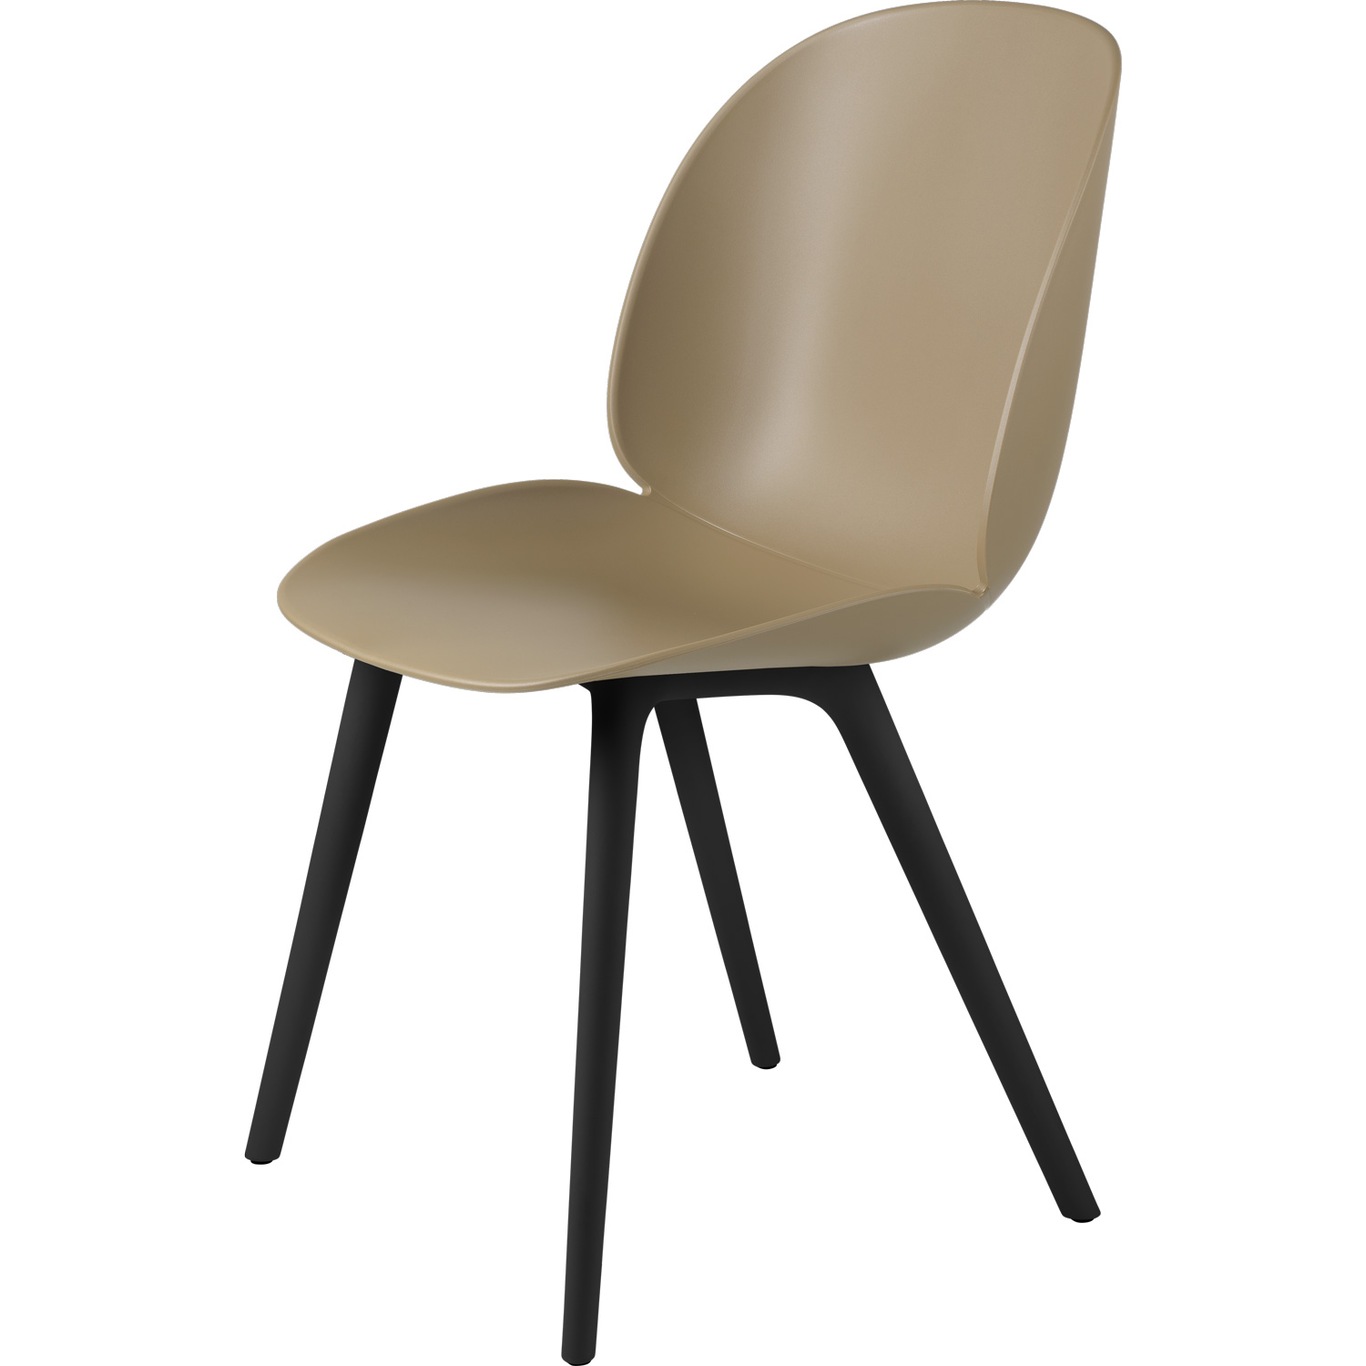 Beetle Chair Un-upholstered Plastic Black Base, Pebble Brown